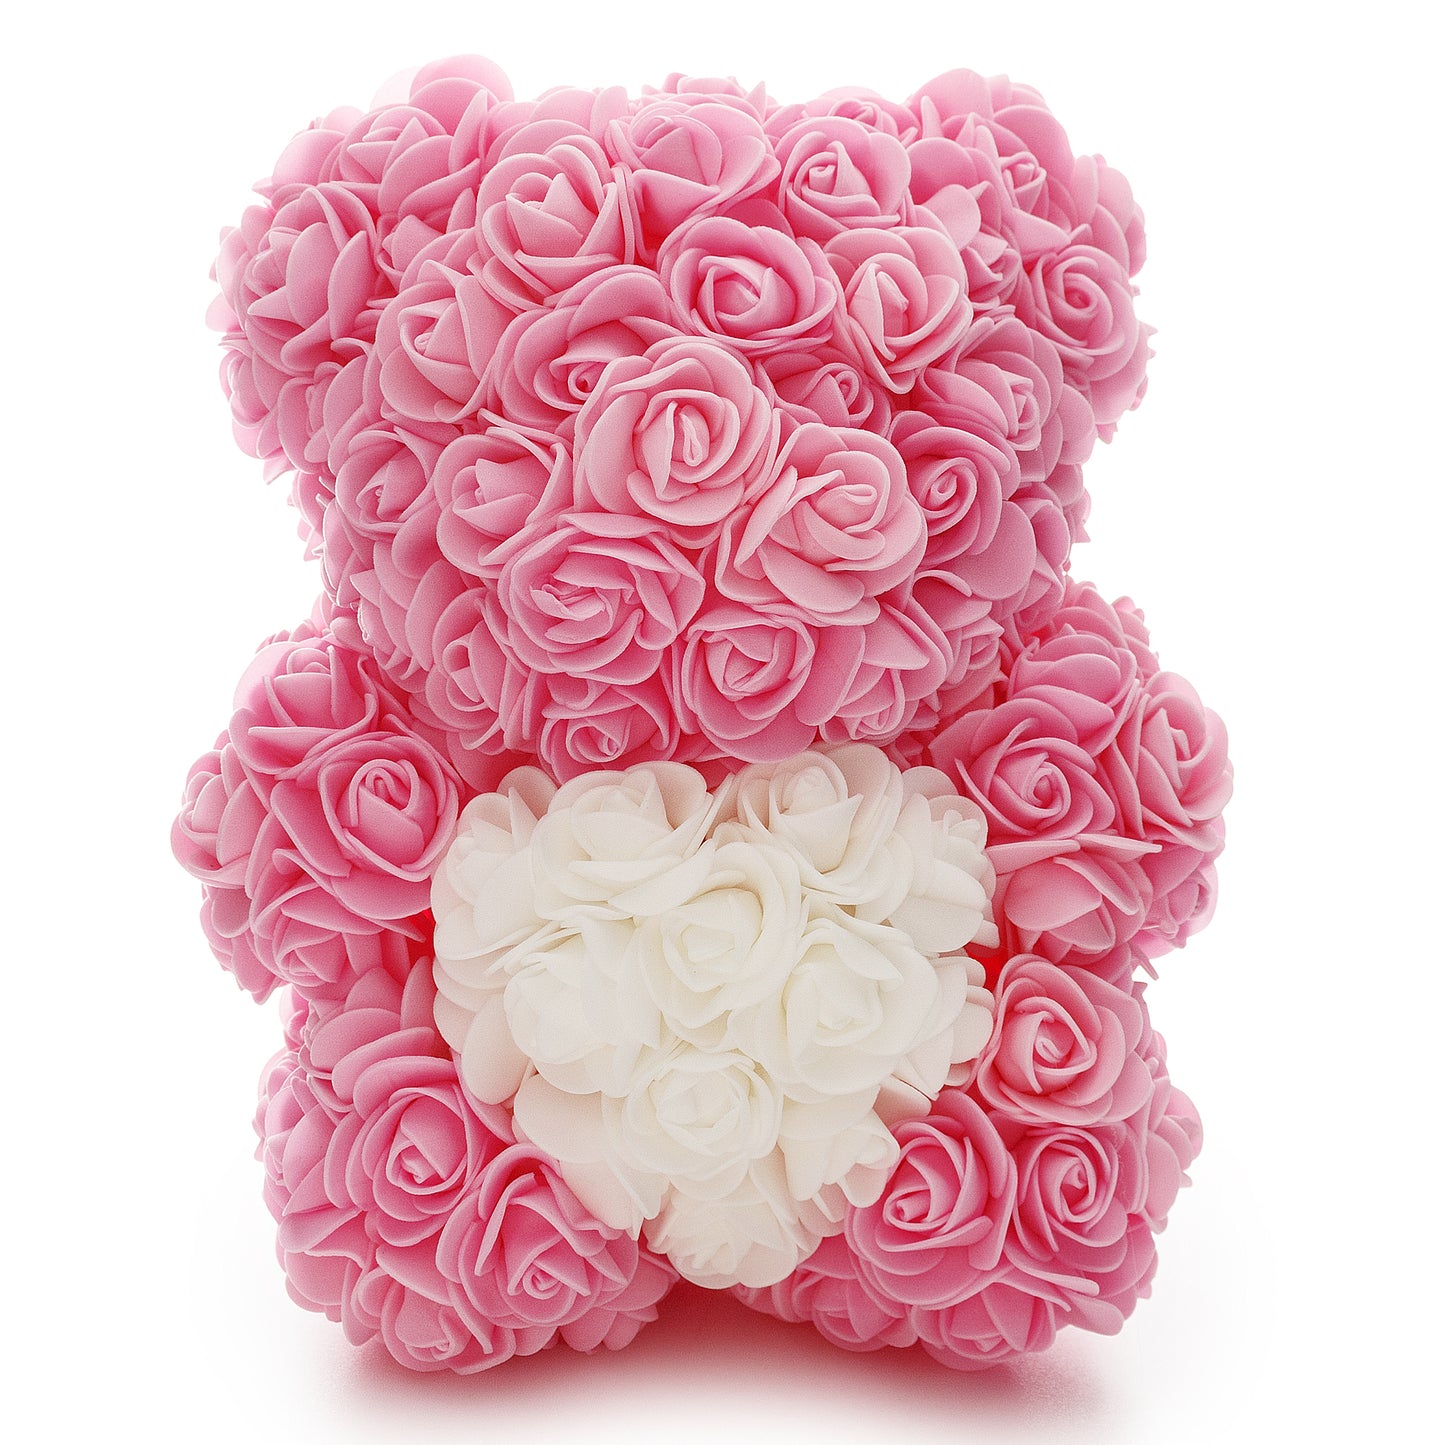 Pink Rose Teddy Bear & White Heart